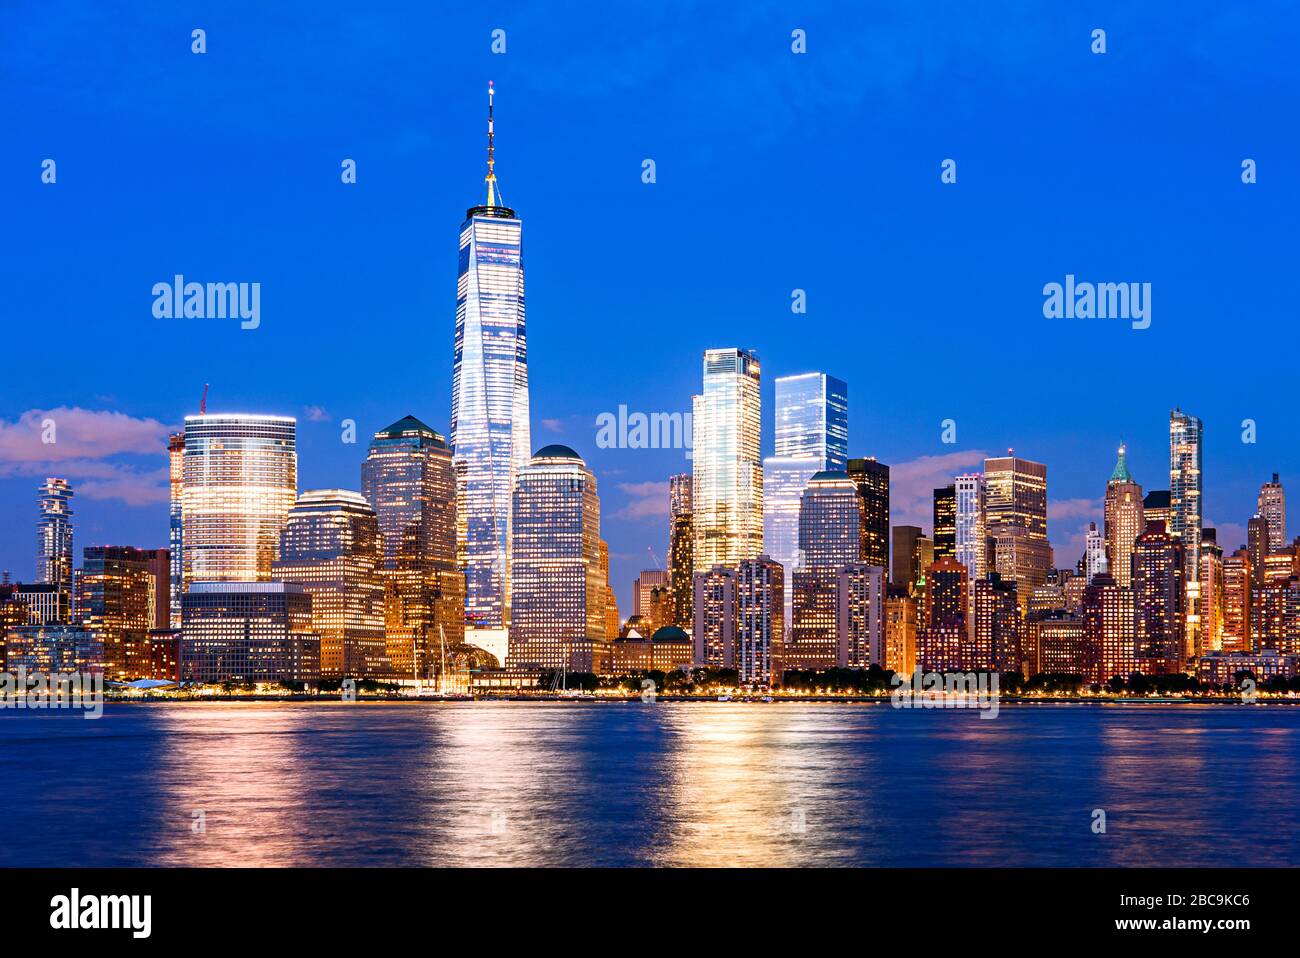 New York Skyline Freedom Tower One World Trade Center Downtown Manhattan quartier financier de New York Banque D'Images